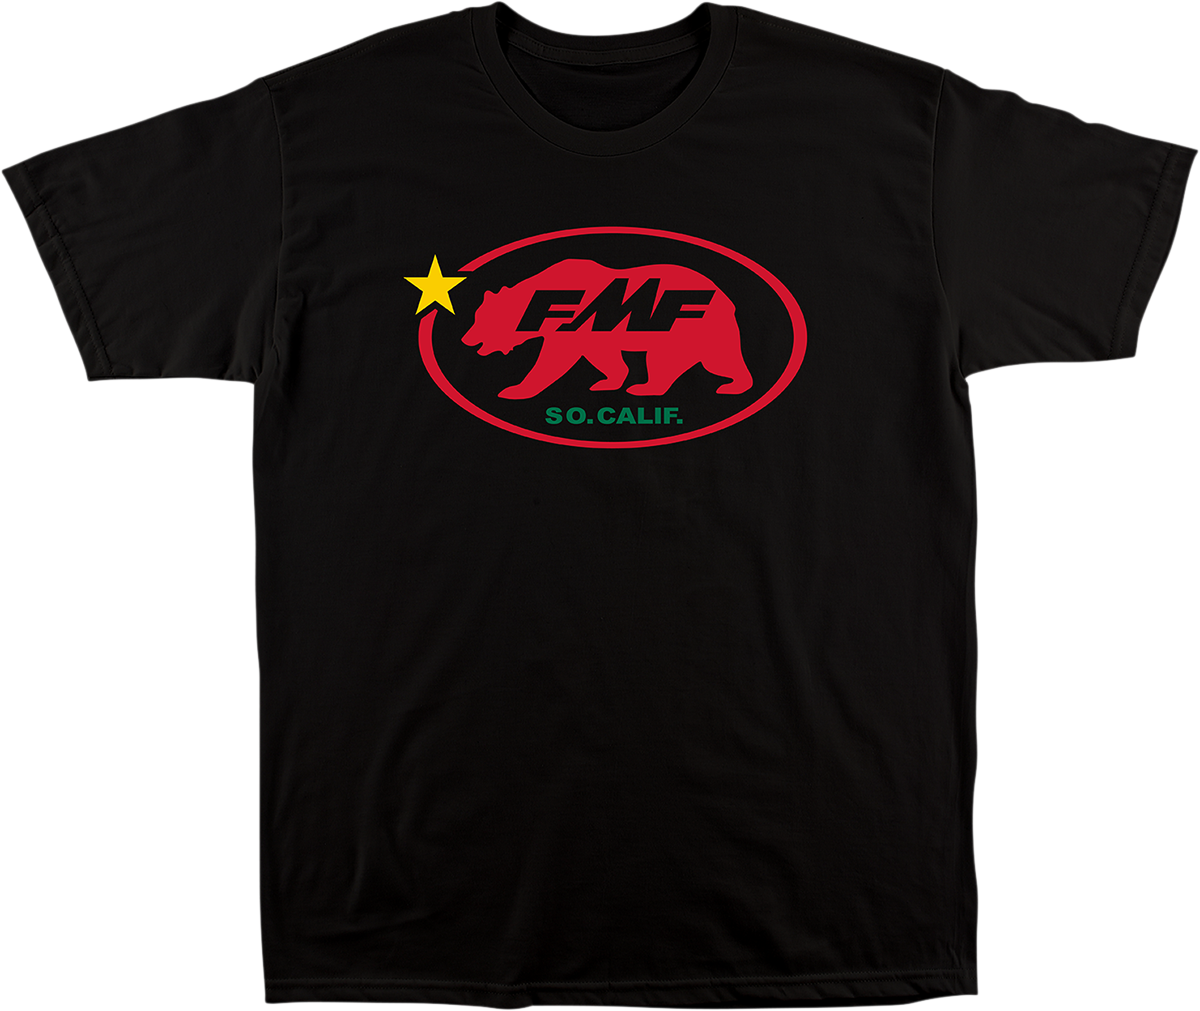 FMF Republic of Exhaust T-Shirt - Black - 2XL SU21118907BK2X 3030-20720